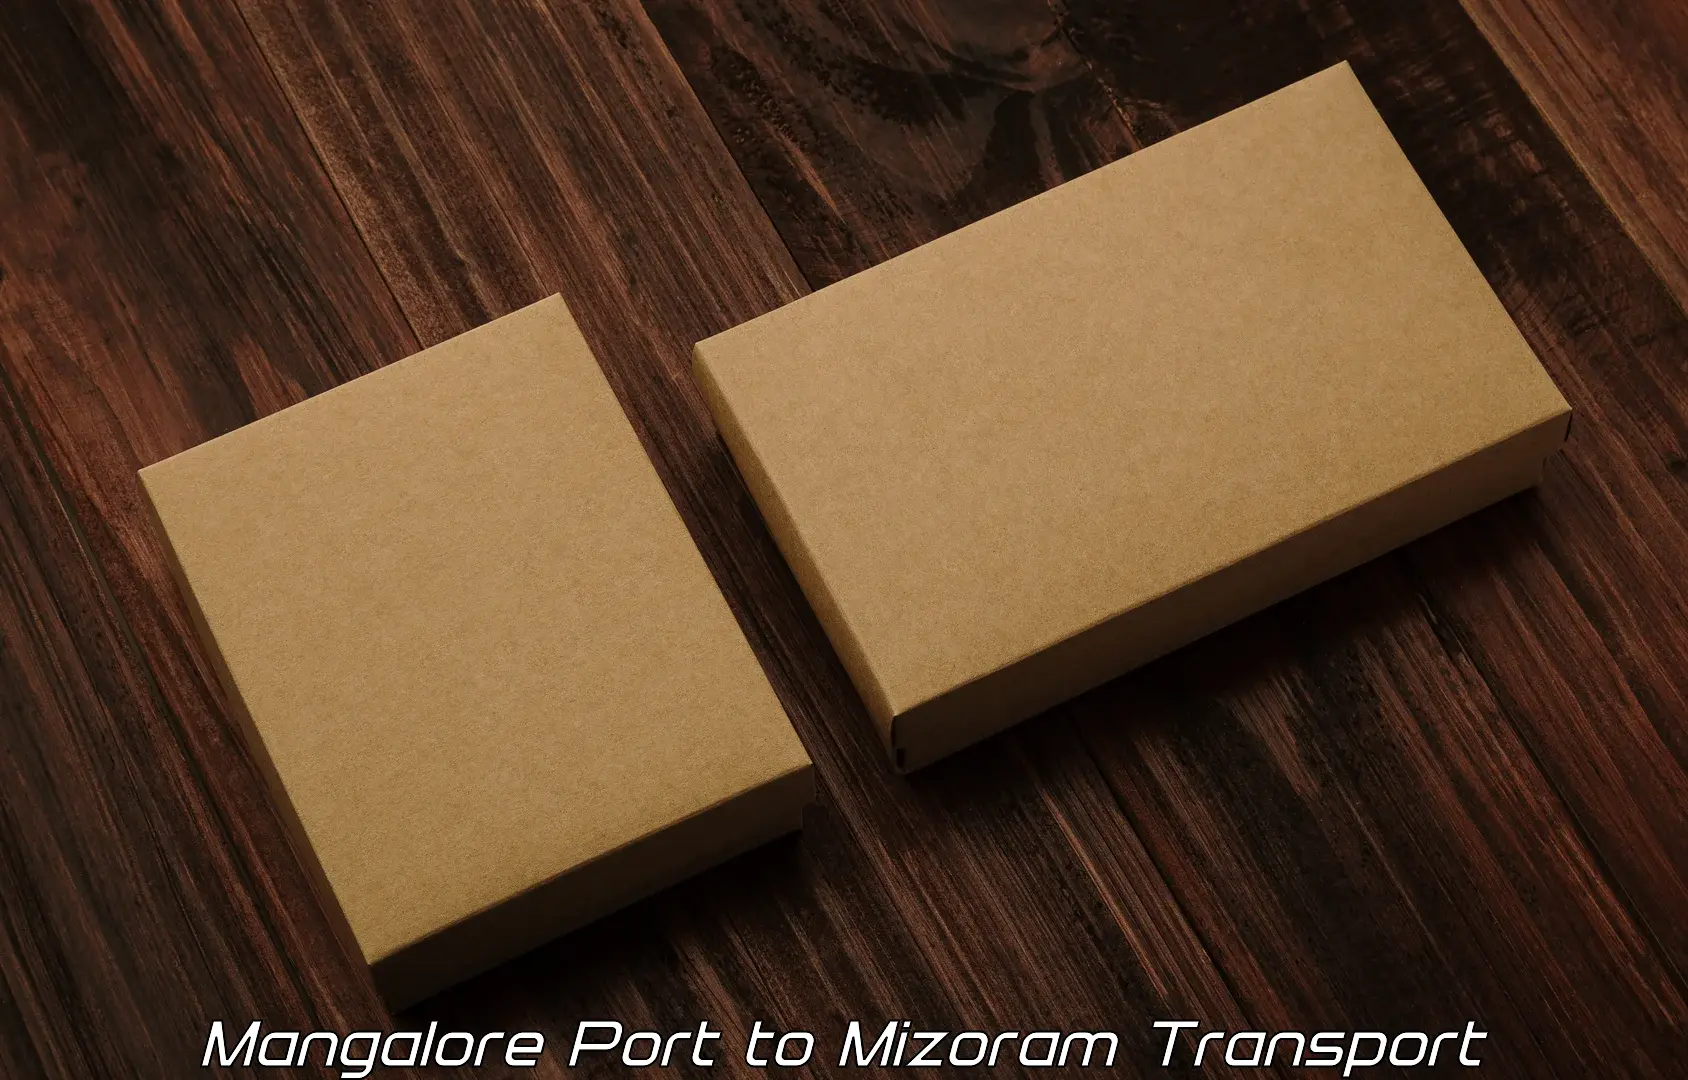 Cycle transportation service Mangalore Port to Mizoram